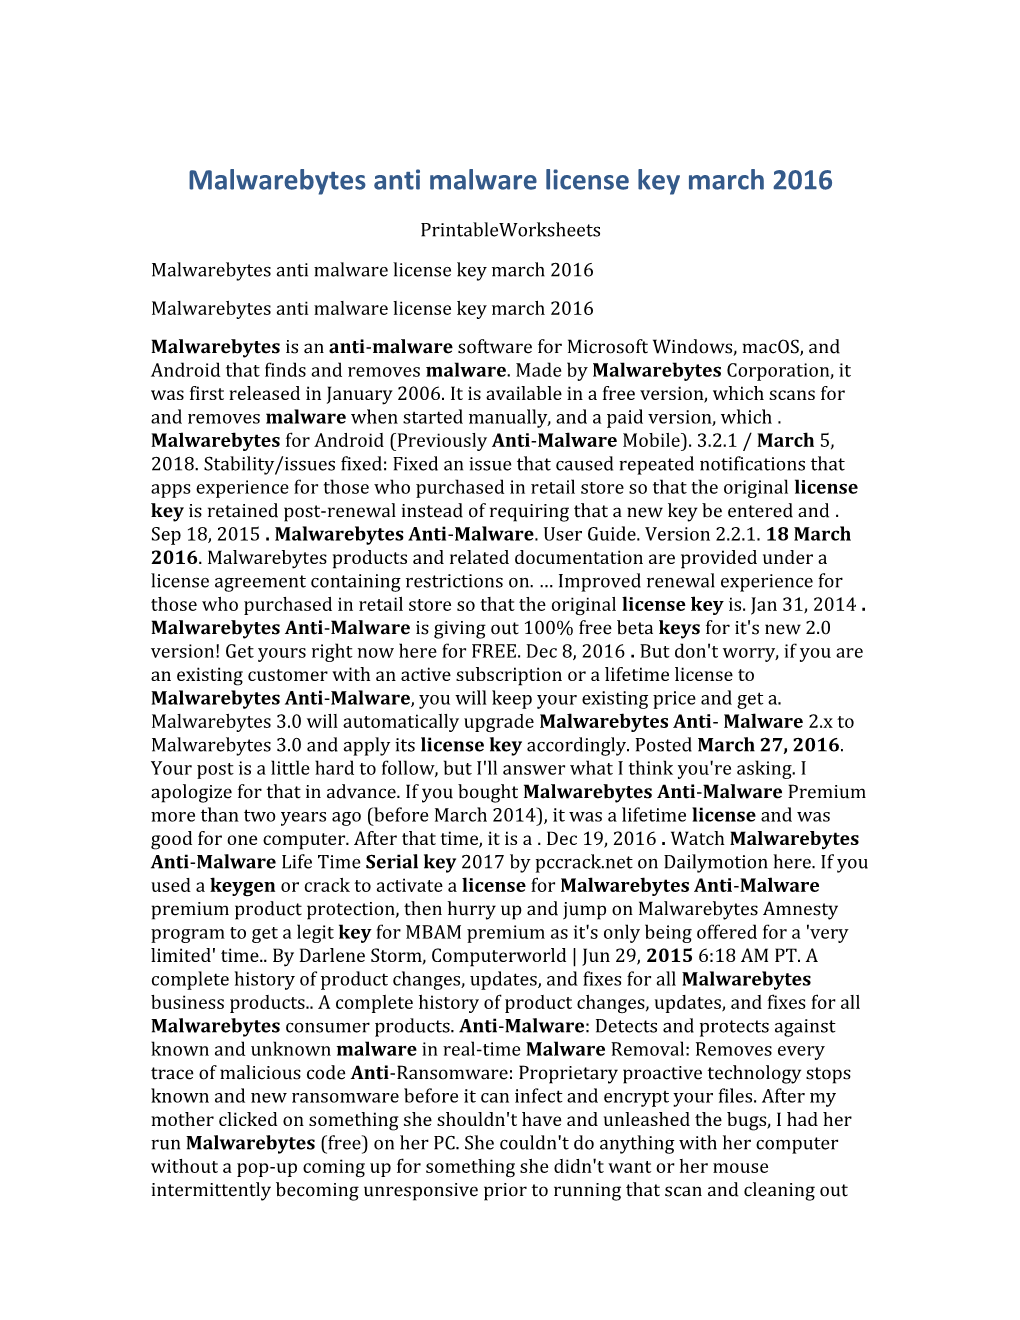 Malwarebytes Anti Malware License Key March 2016